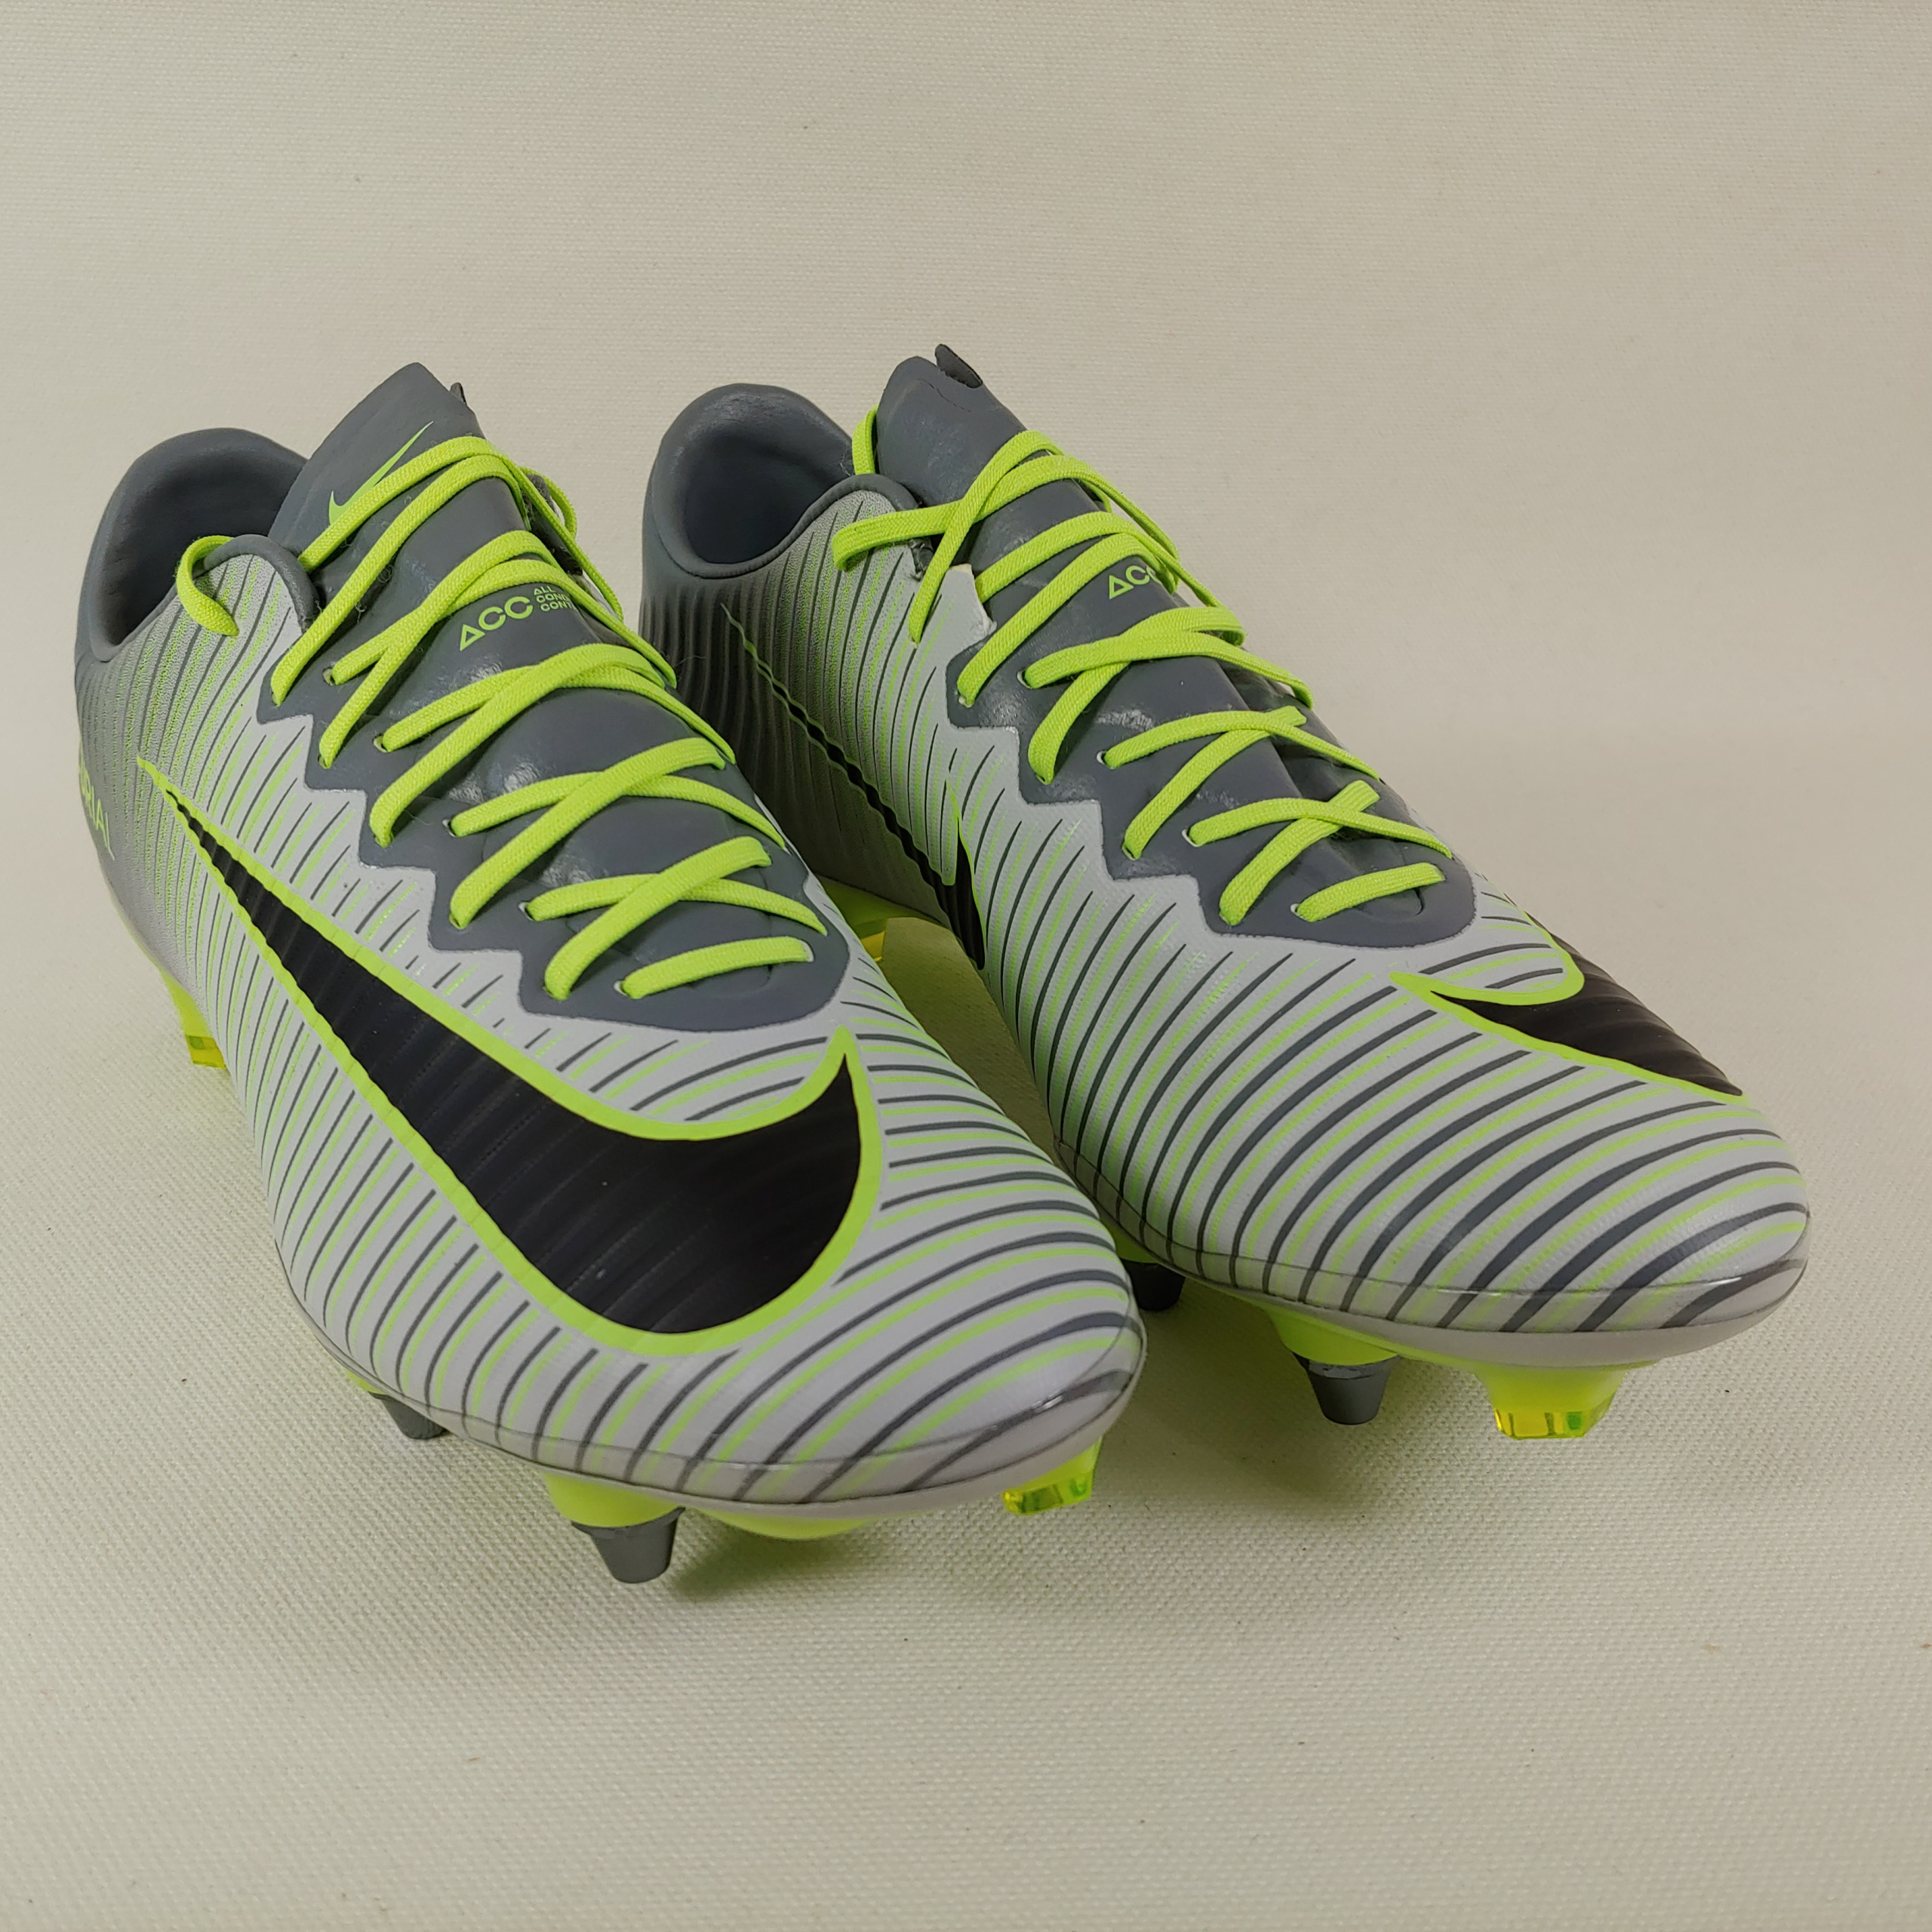 Nike Football Boots Australia Nike Mercurial Vapor XII PRO